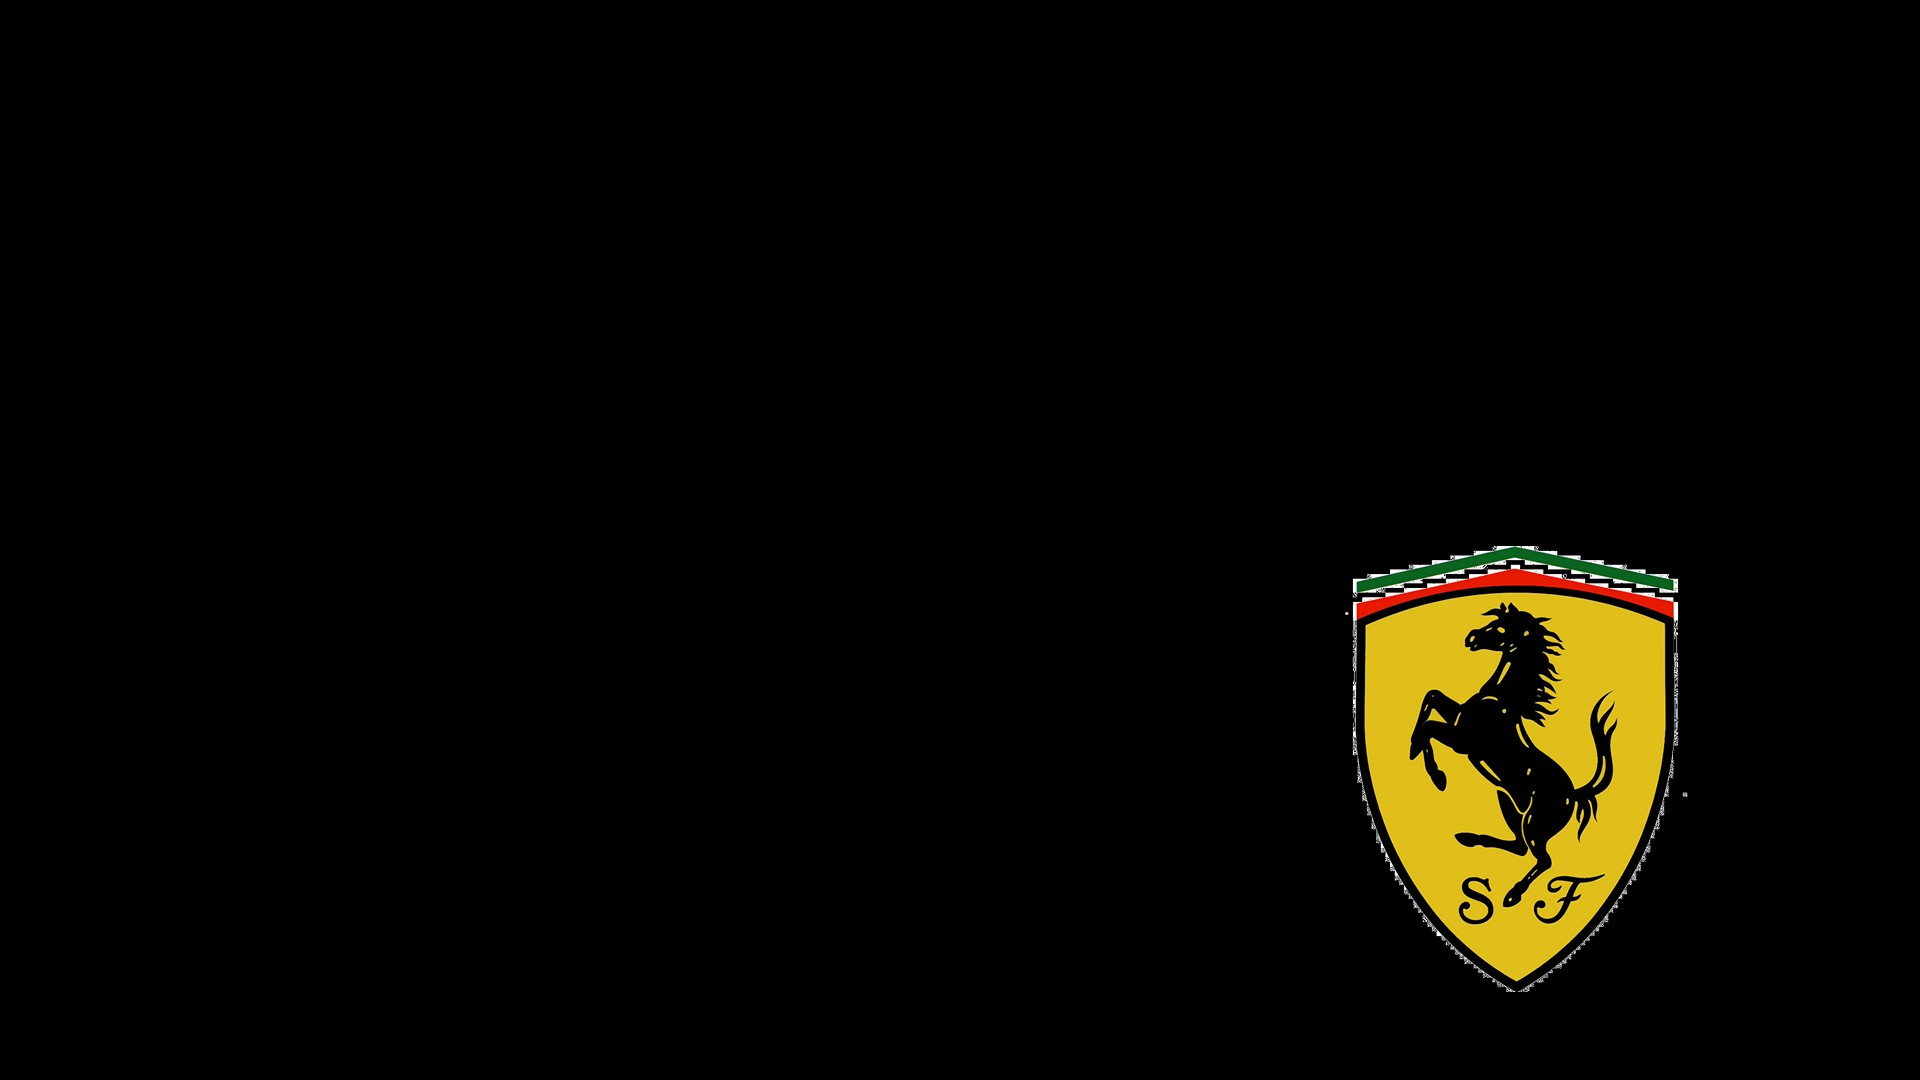 Free Download Scuderia Ferrari Logo Black Background 19x1080 Hd Motorsport 19x1080 For Your Desktop Mobile Tablet Explore 47 19x1080 Hd Sports Wallpapers Nike Hd Wallpapers 1080p Football Hd Wallpapers